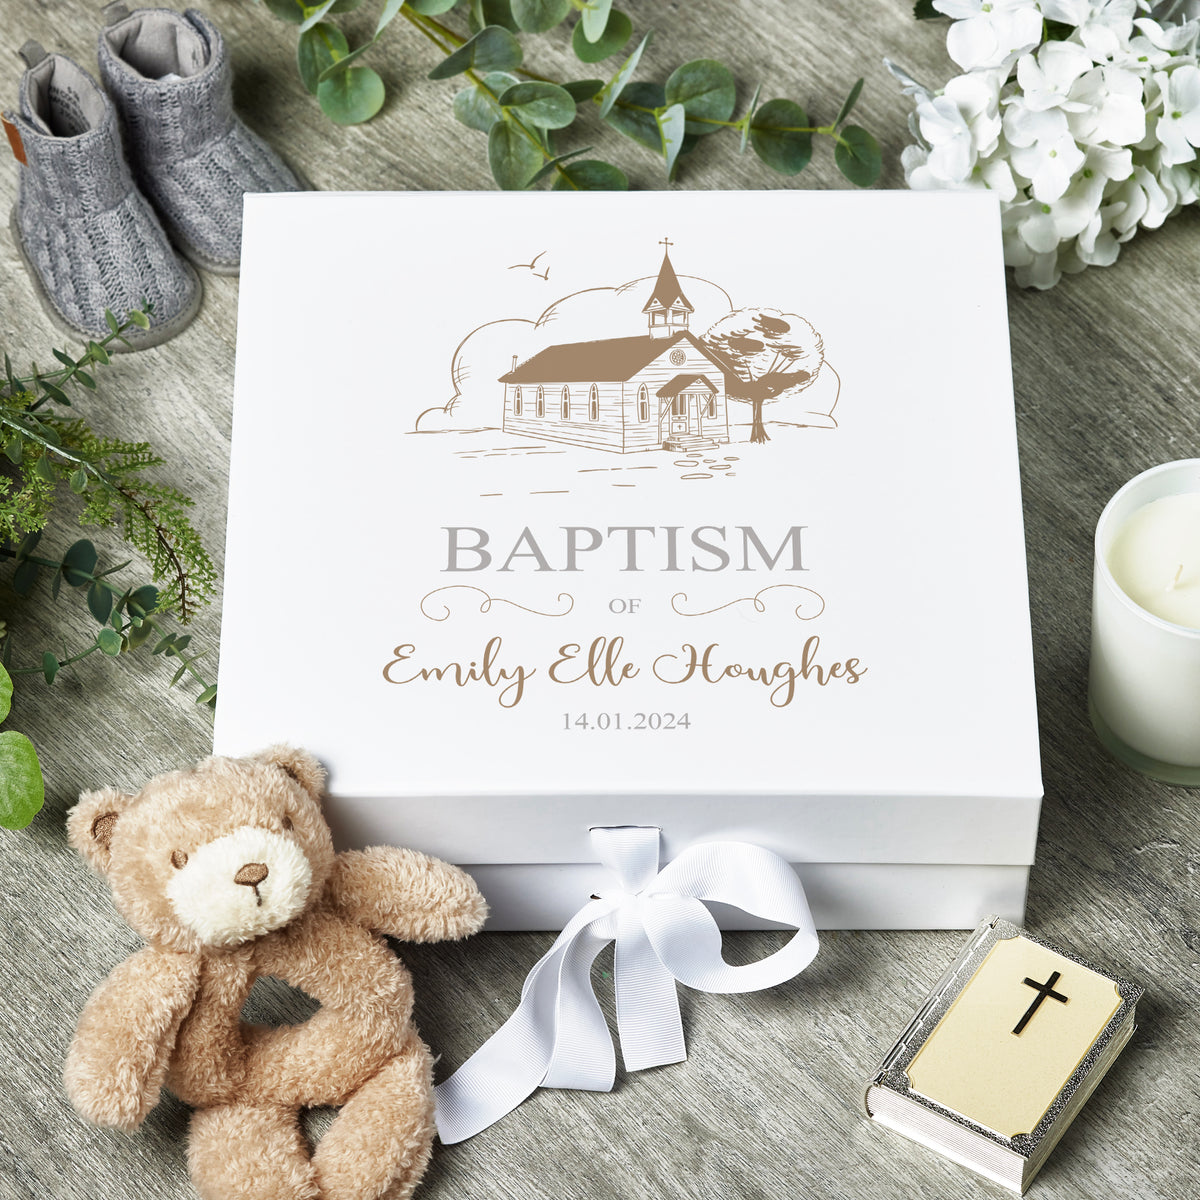 Personalised Baptism Church Keepsake Memory Box Gift